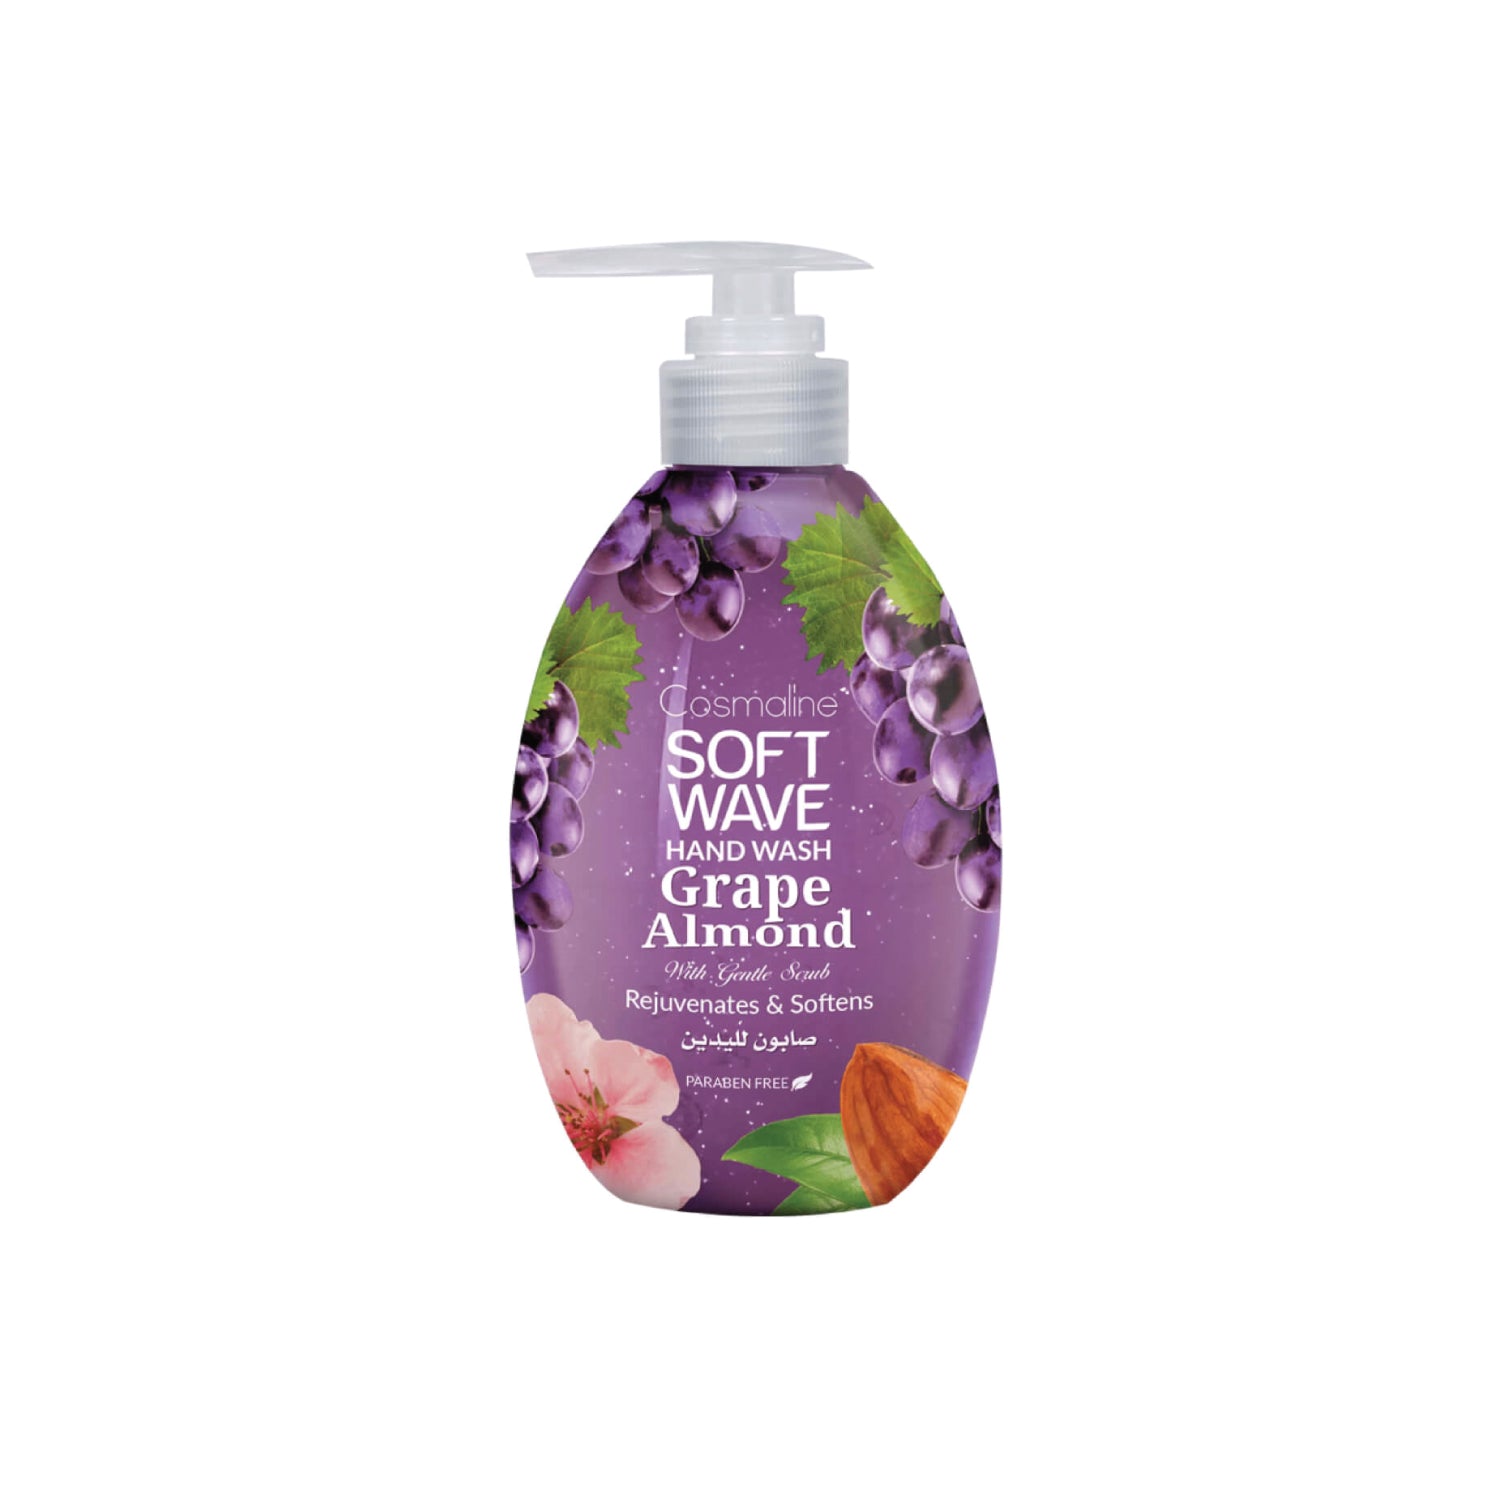 Soft Wave Hand Wash Scrub Almond Grape 550ml - MazenOnline